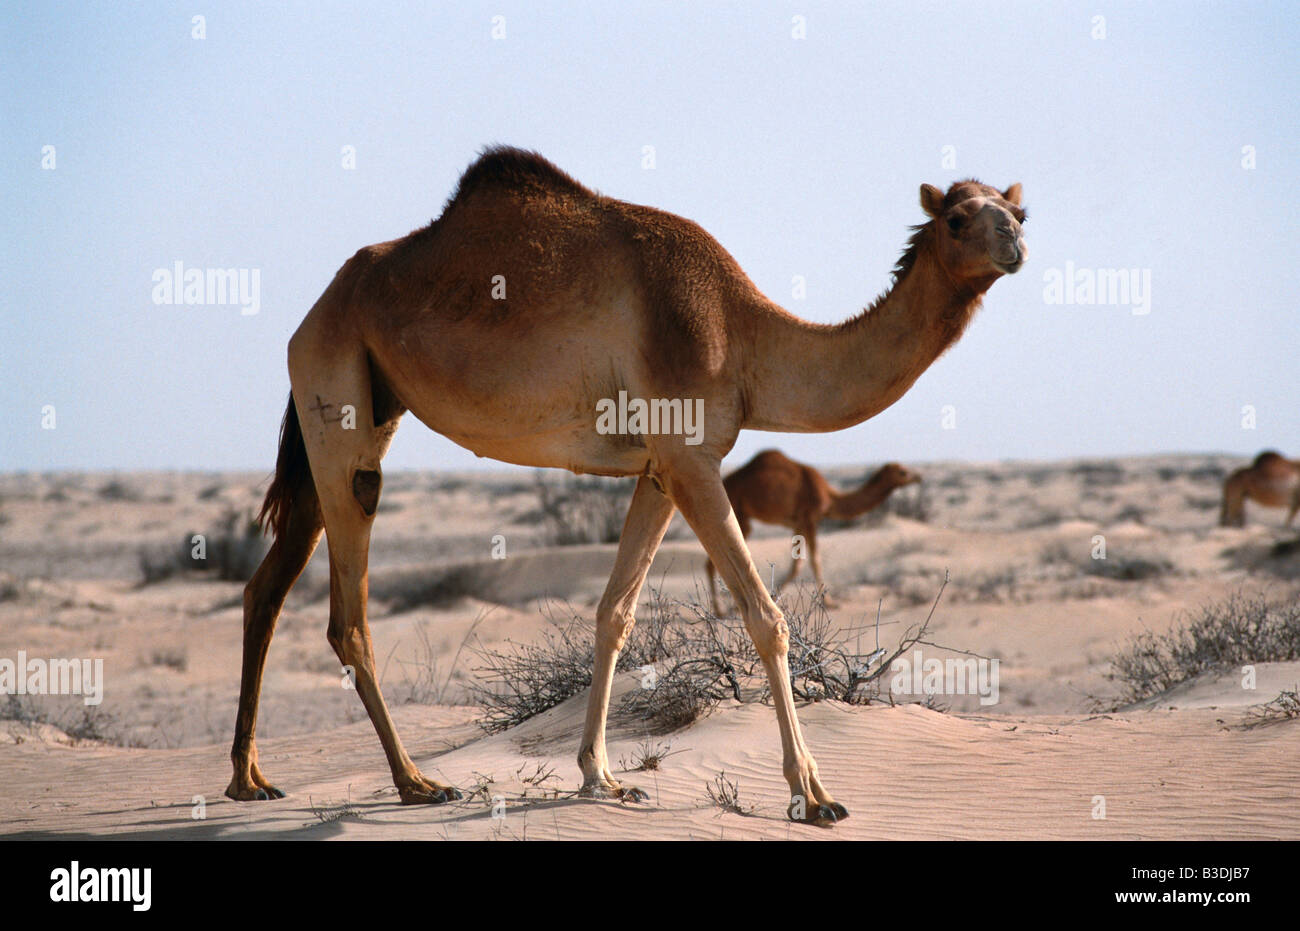 Kamele Karawane Kamel Wuestenschiff Camel Kamel camelus dromedarius Dromedar  einhoeckriges Kamel Arabian dromedary camel Stock Photo - Alamy